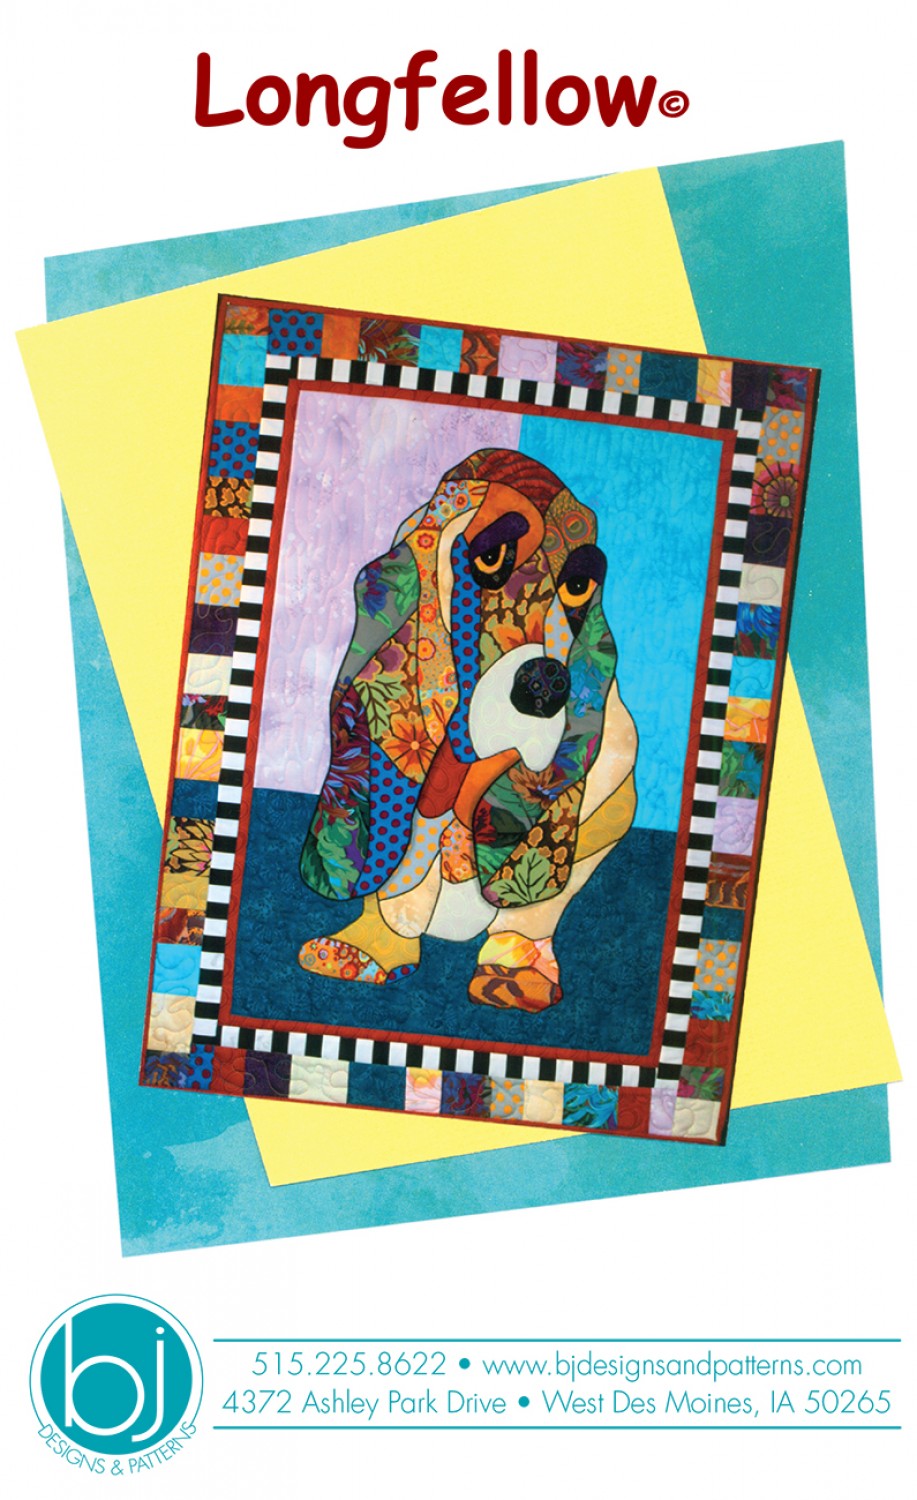 BJ Designs & Patterns Longfellow Basset Hound Dog Applique Quilt Pattern Front Cover